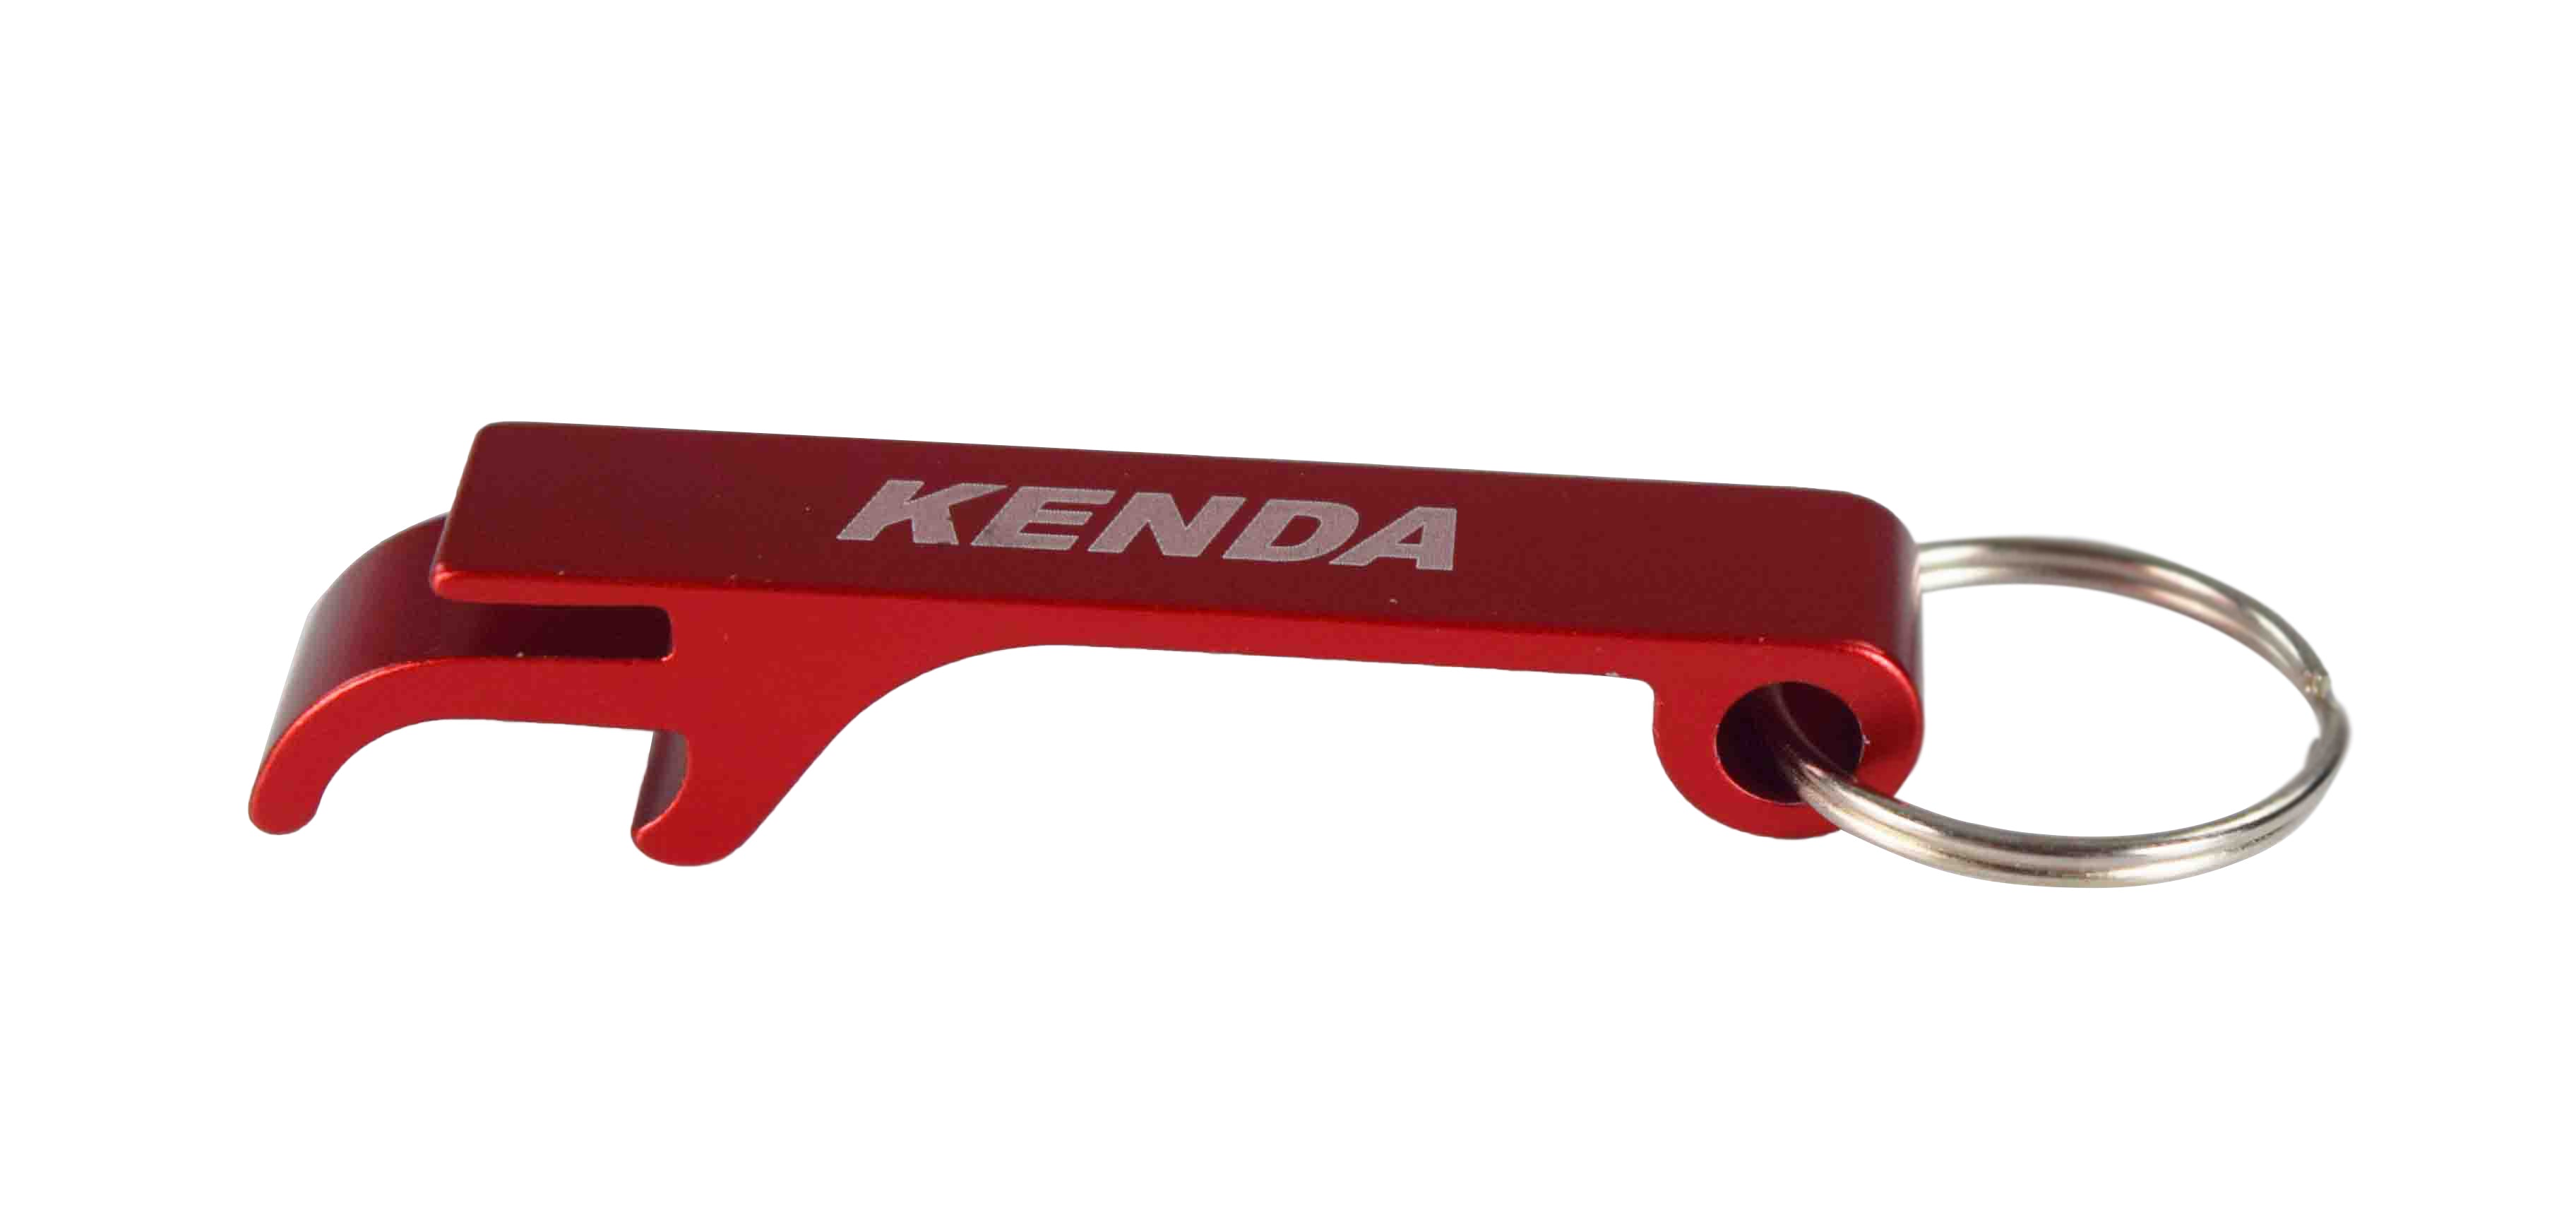 Kenda 277010N4 205/50-10 Pro Tour 4 Ply Tubeless Golf Cart Tire w Key Chain Bottle Opener